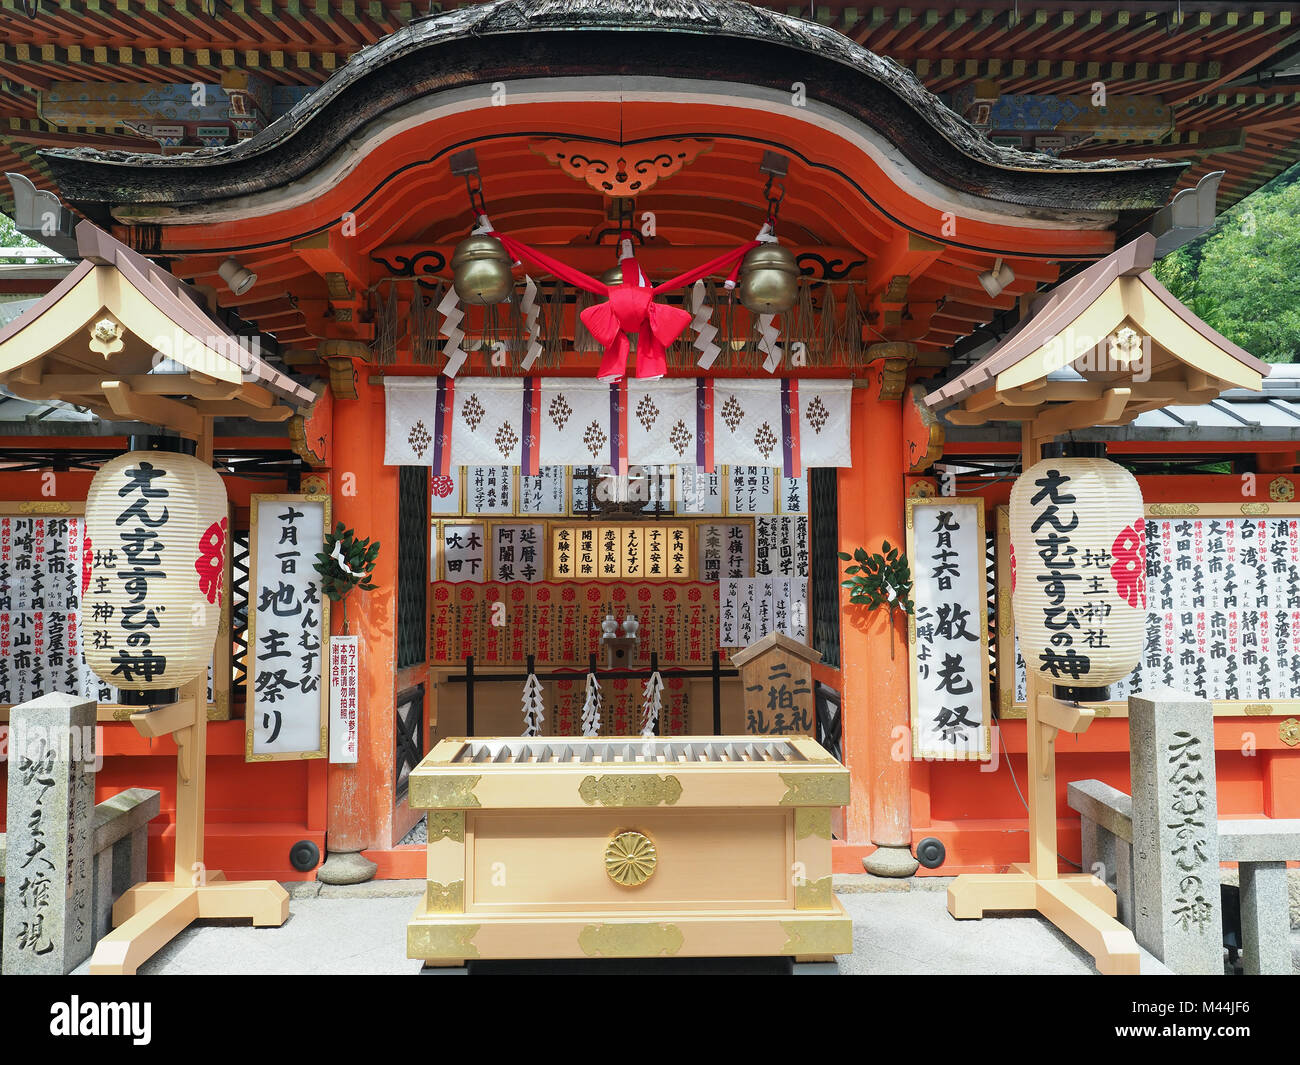 View of the Jishu-jinja inner shrine located within the Kiyomizu-dera temple in Kyoto Japan Stock Photo